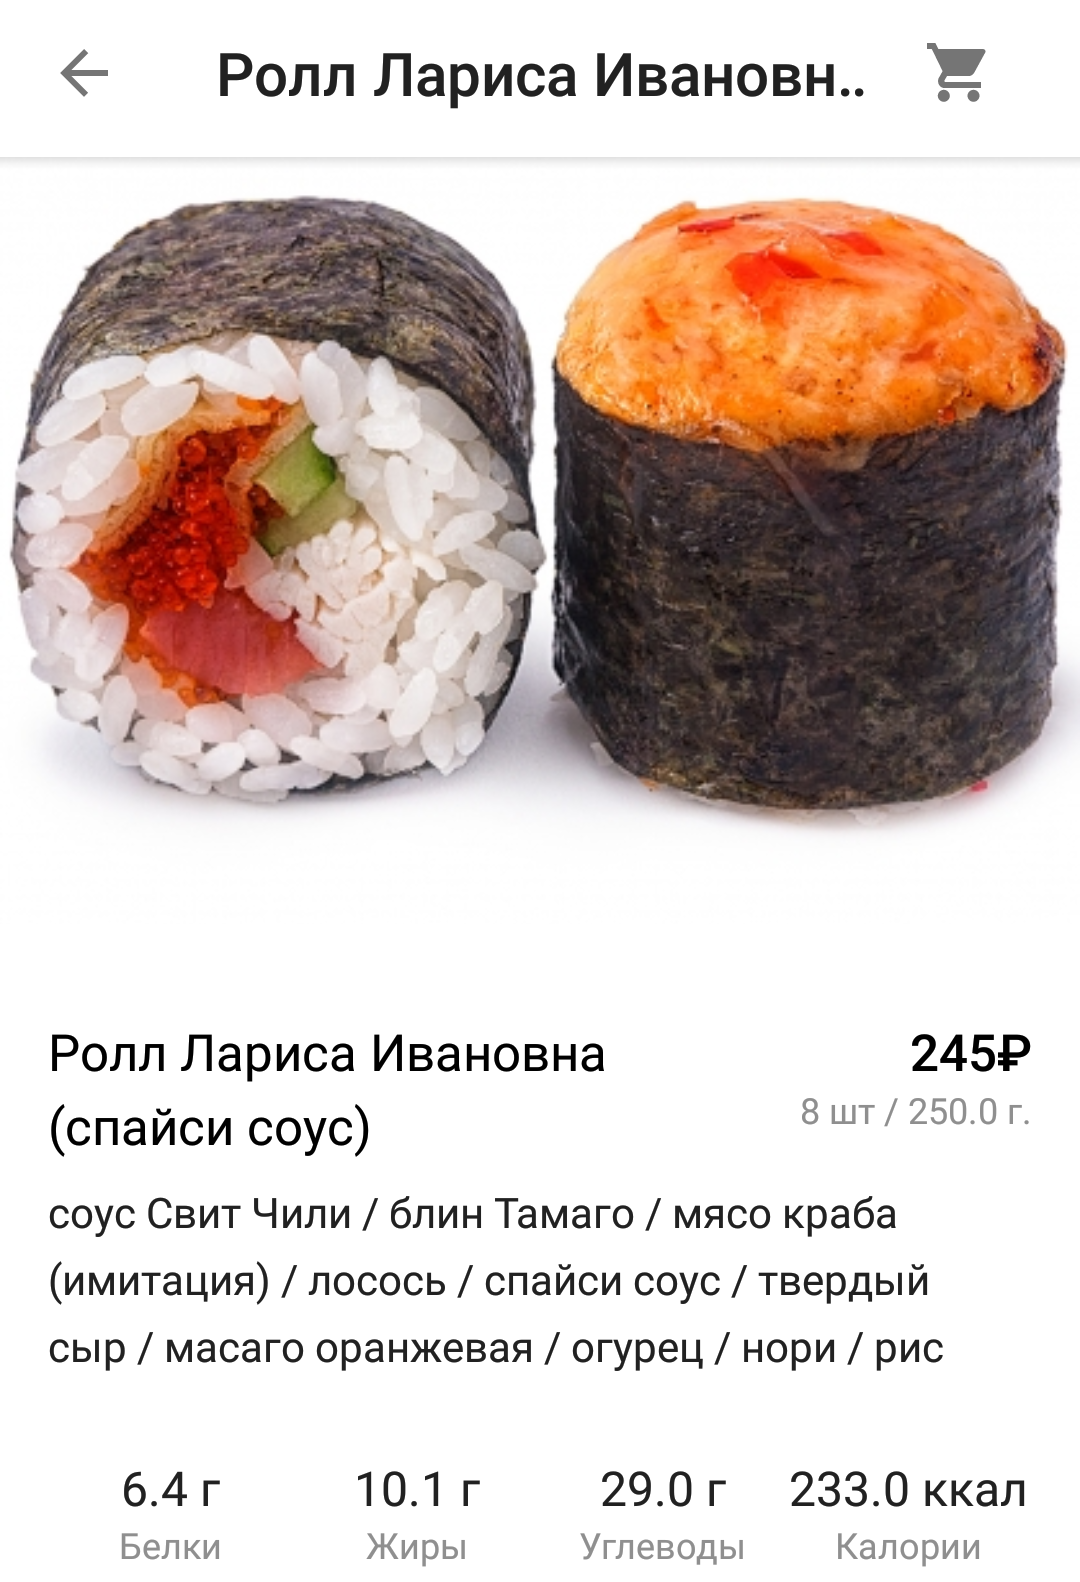 I want Larisa Ivanovna! - Marketing, Rolls, Food